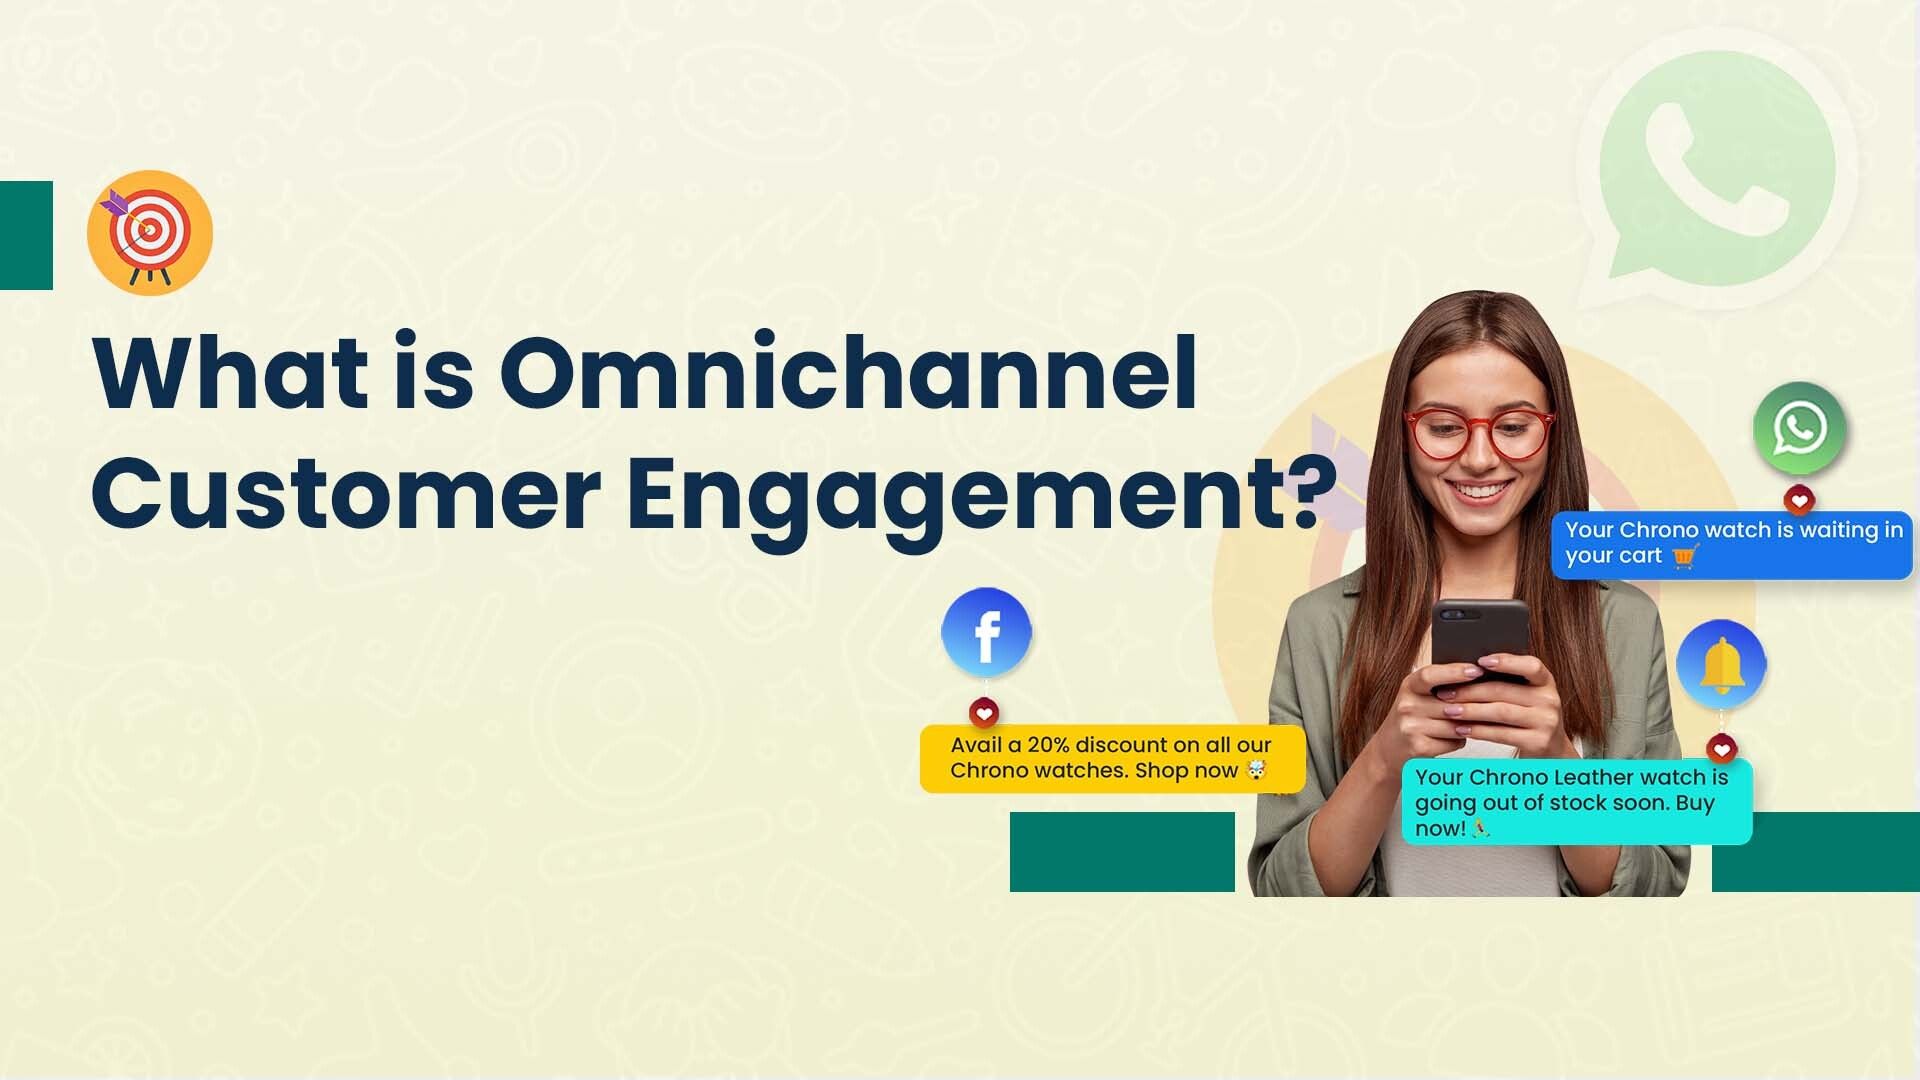 Omnichannel Customer Engagement Platform